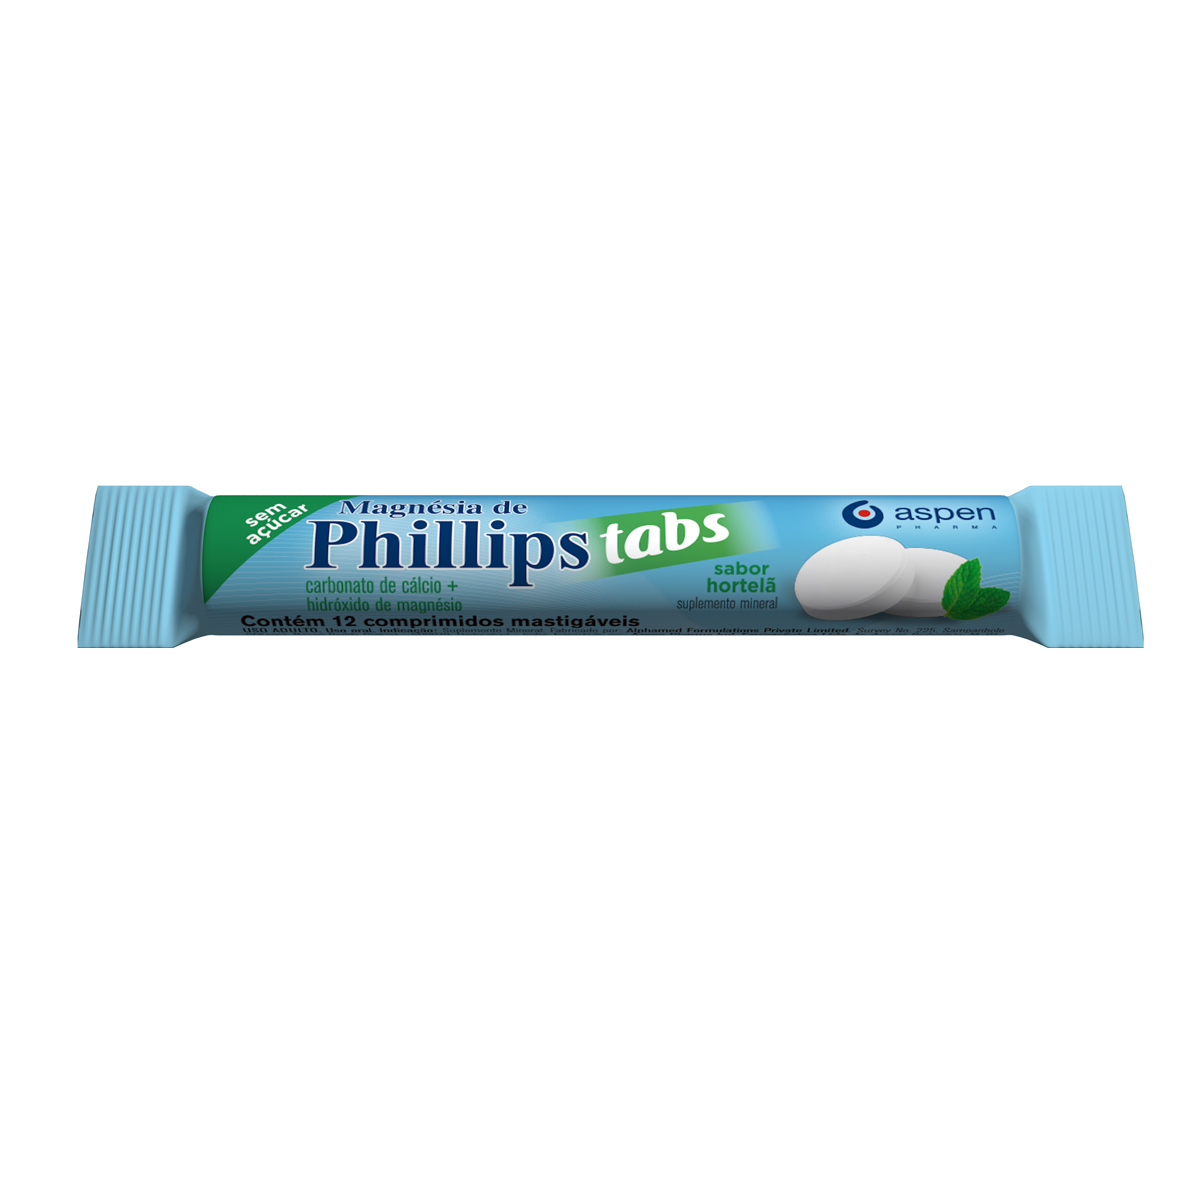 Magnésia de Phillips Tabs Sabor Hortelã Sem Açúcar 12 comprimidos mastigáveis